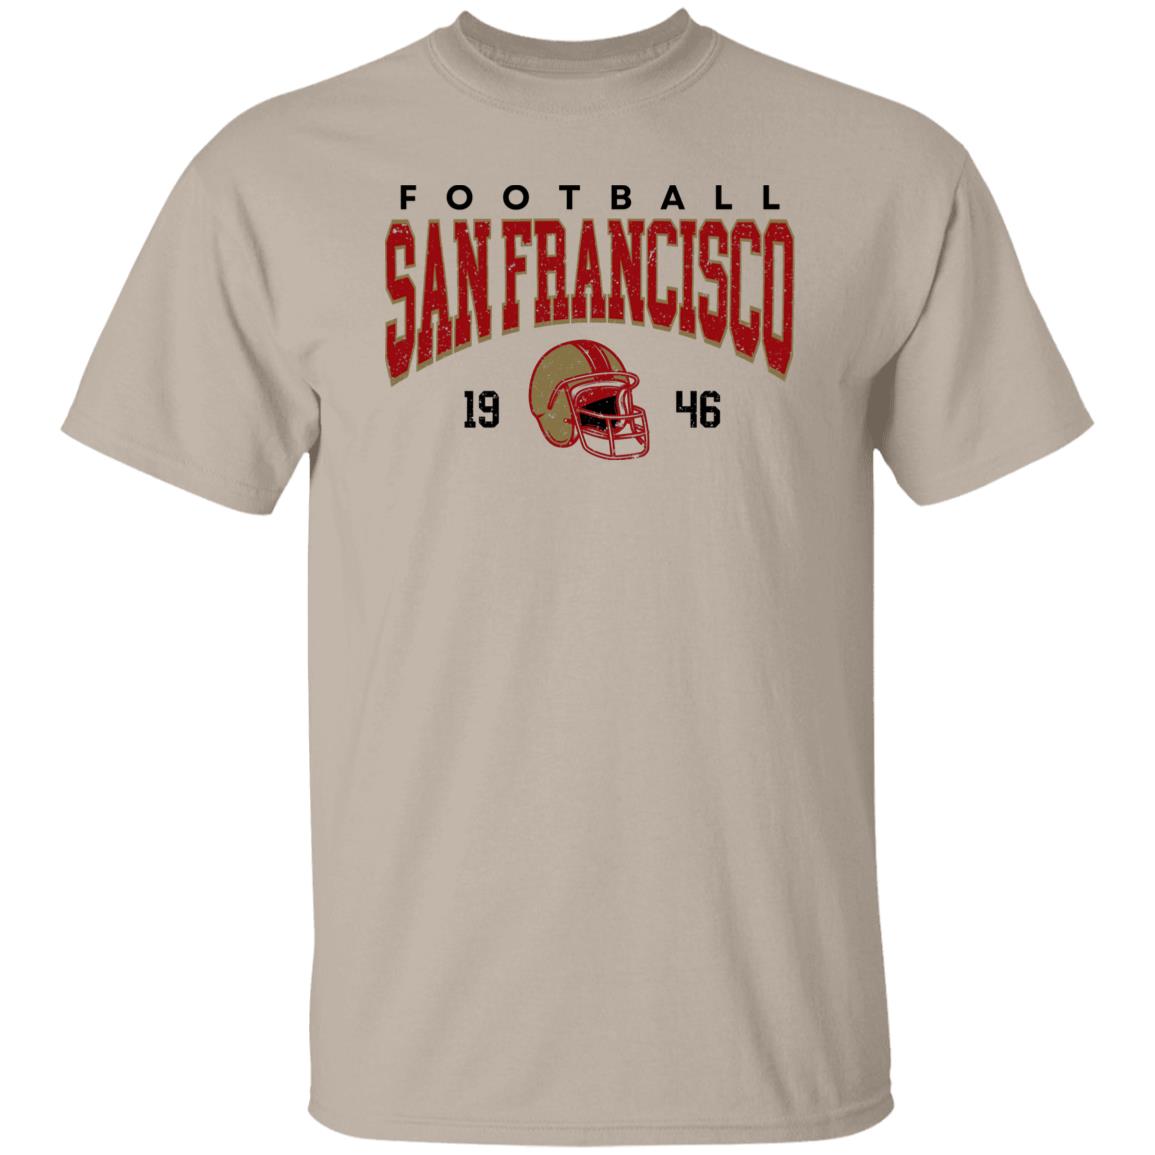 San Francisco Vintage Style T-shirt